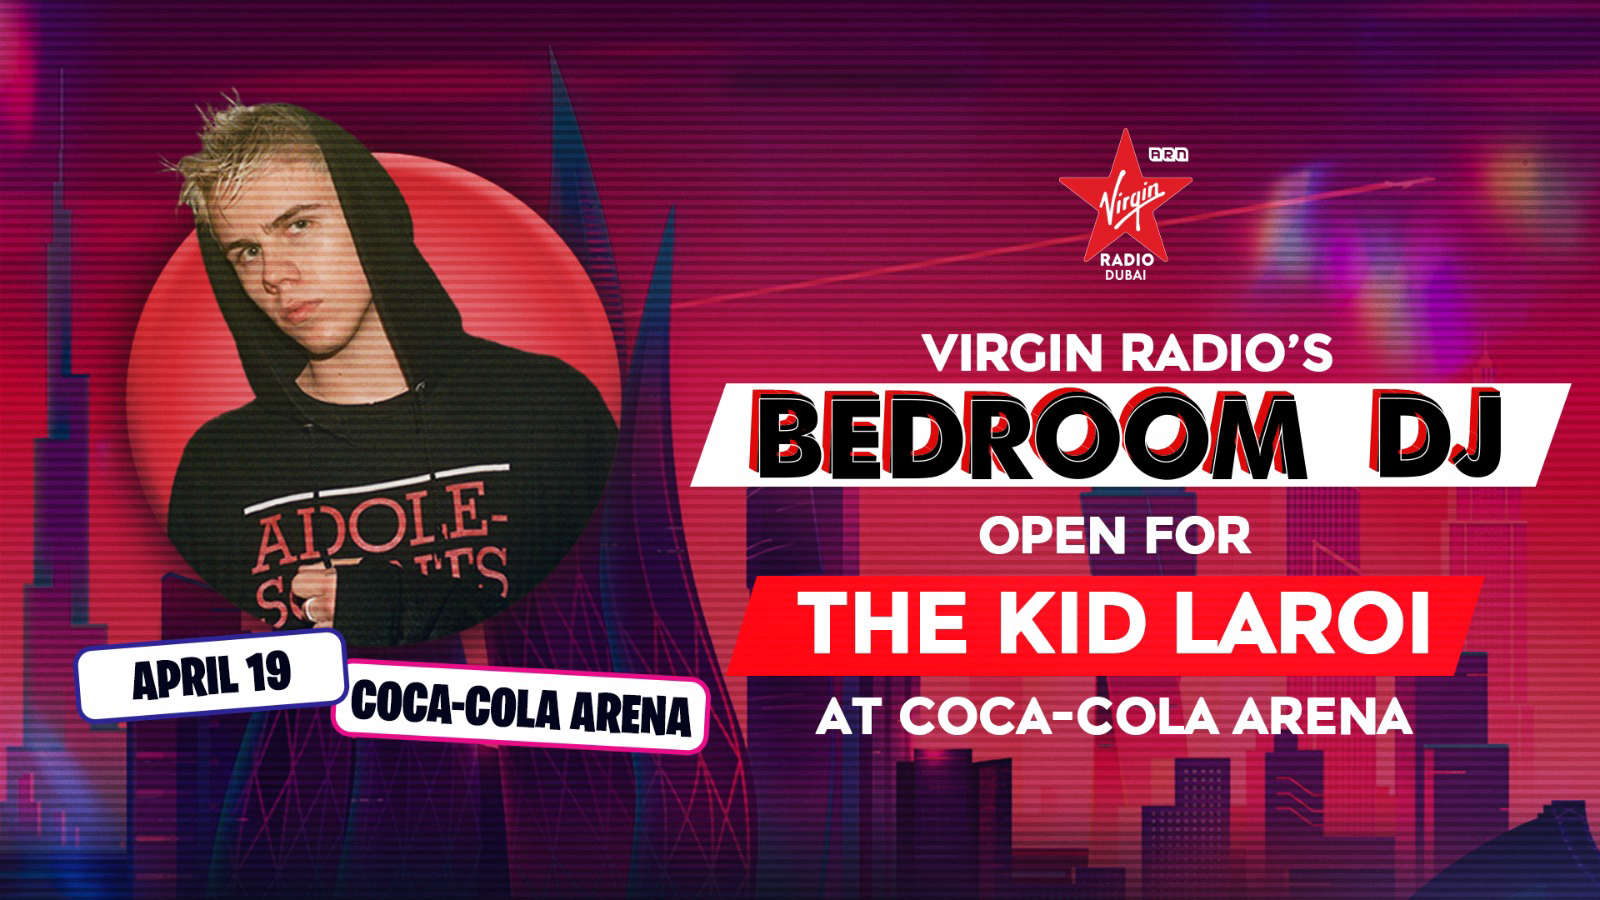 Virgin Radio's Bedroom DJ